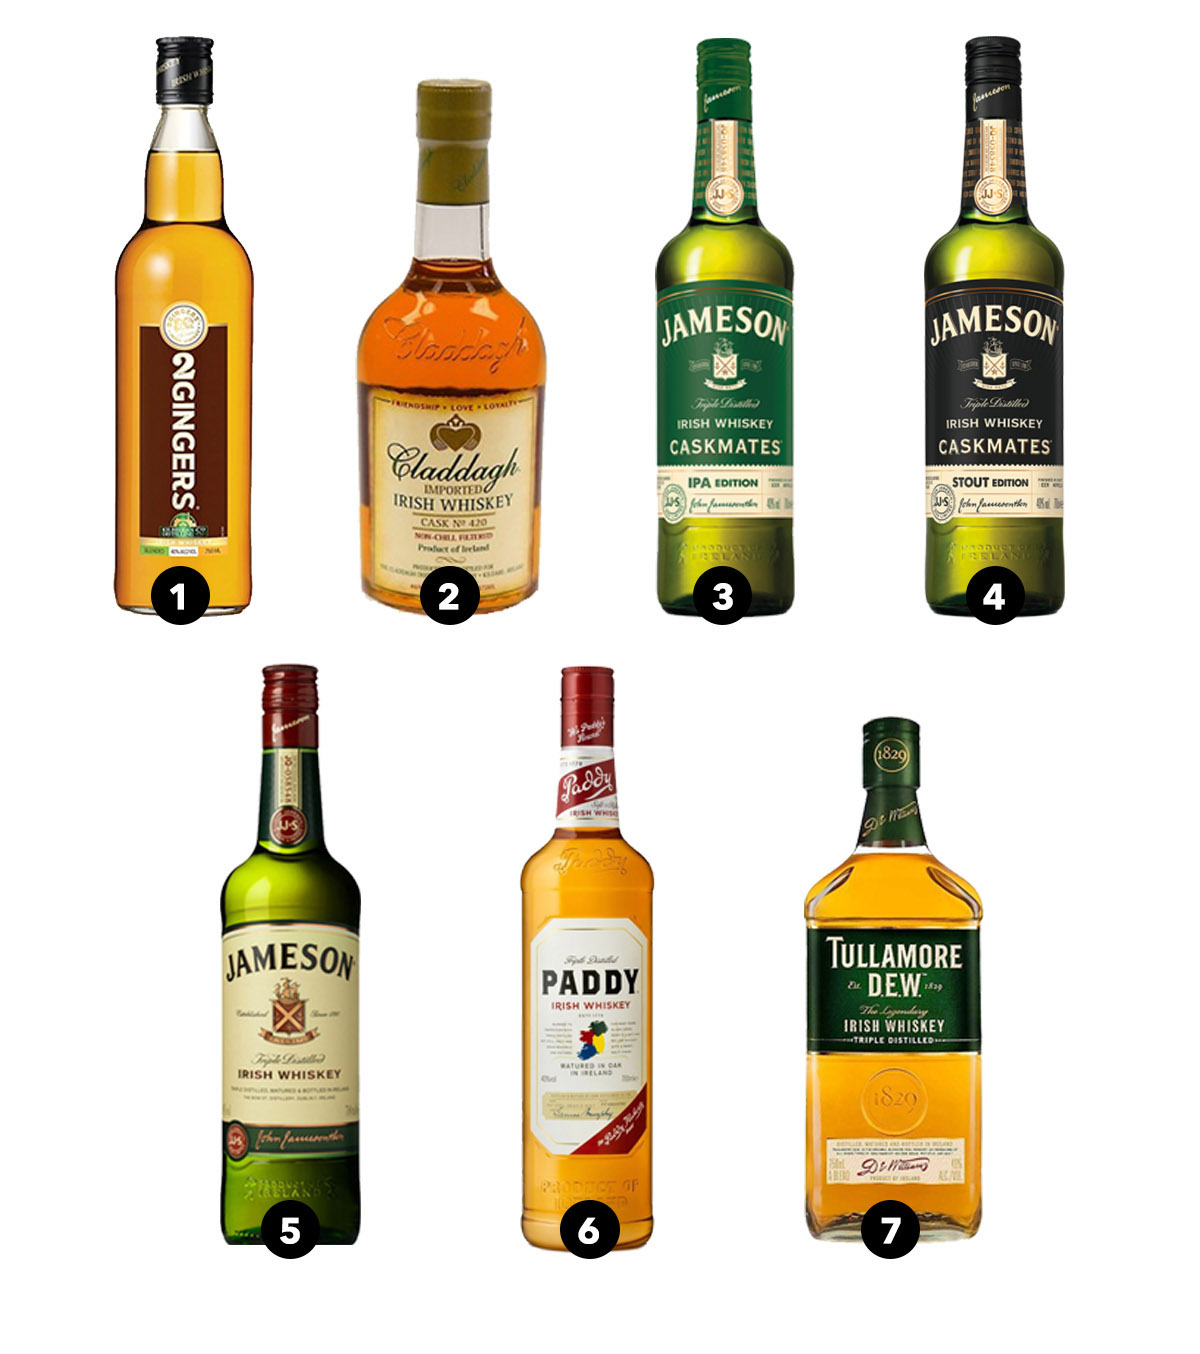 2 Gingers, Claddagh, Jameson Caskmates IPA Edition, Jameson Caskmates Stout Edition, Jameson, Paddy Old Irish Whiskey, Tullamore Dew 80 Proof